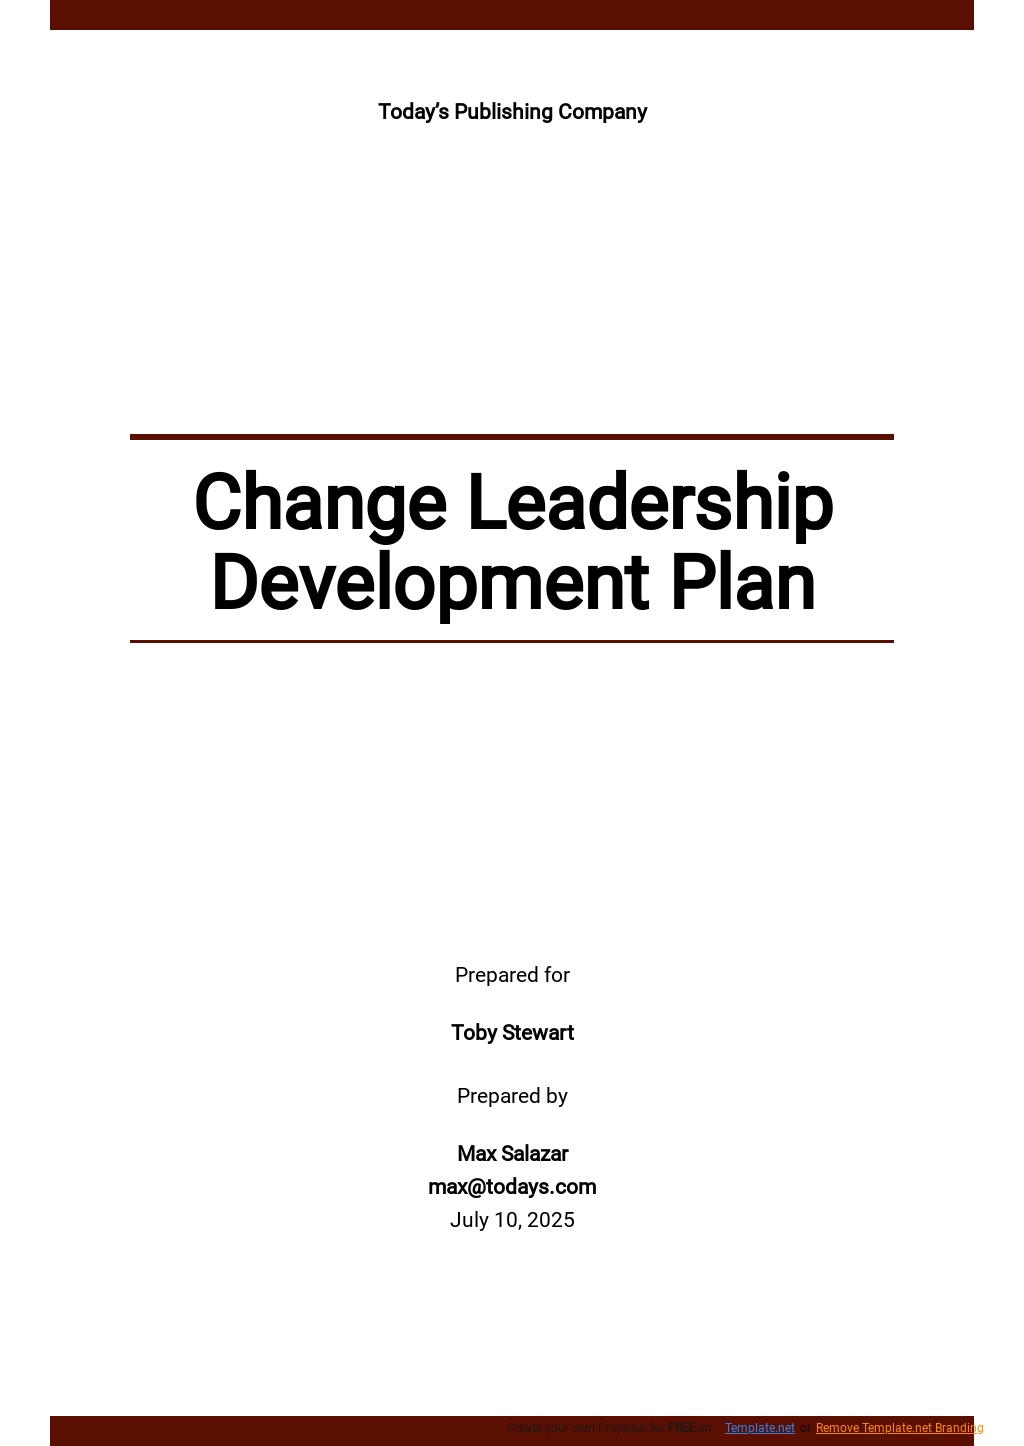 Change Leadership Development Plan Template